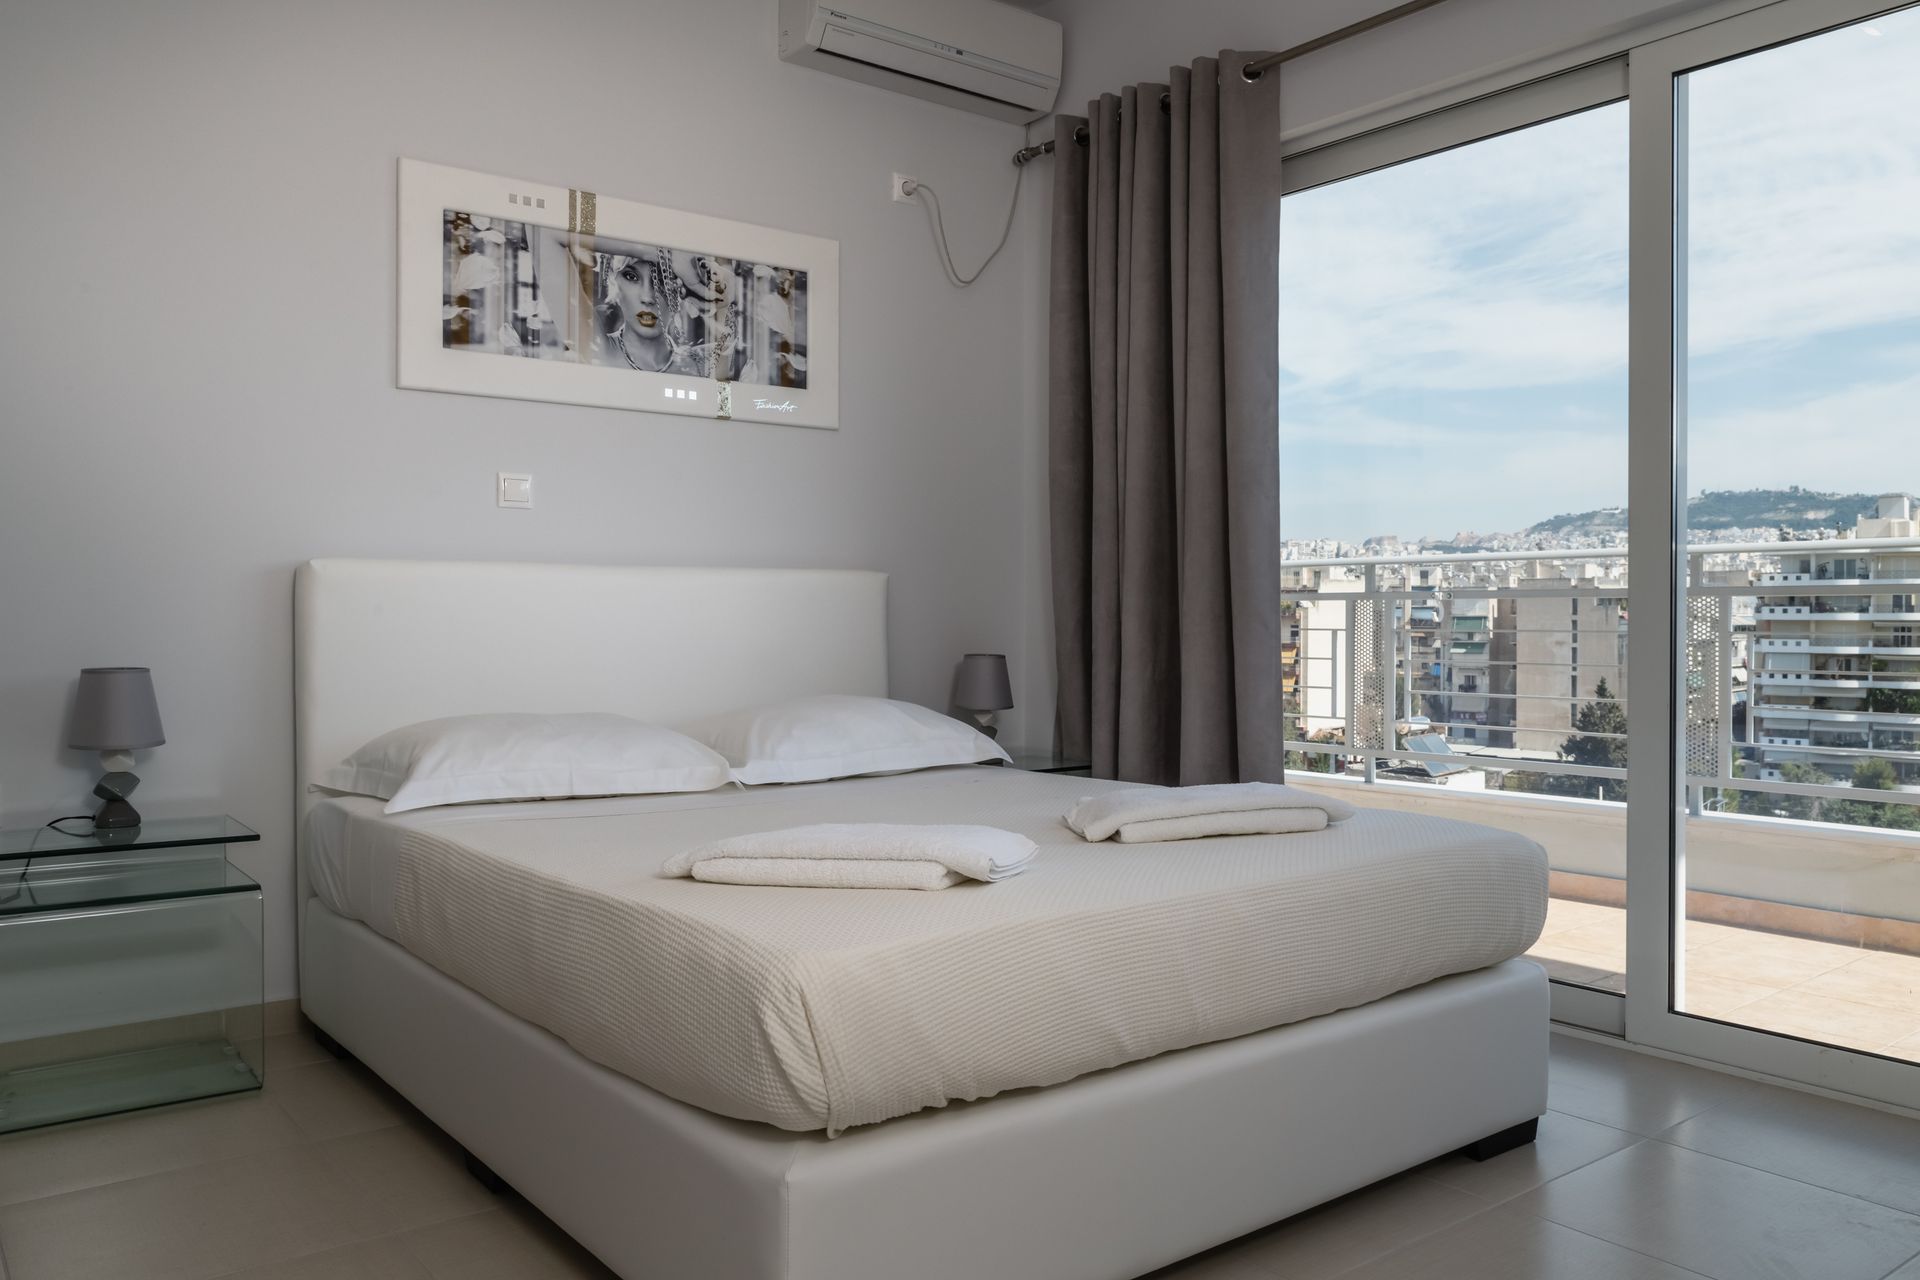 Alekos Apartments Athens - Αθήνα ✦ 3 Ημέρες (2 Διανυκτερεύσεις) ✦ 2 άτομα ✦ 1 ✦ έως 30/09/2022 ✦ Κοντά στο κέντρο της πόλης!